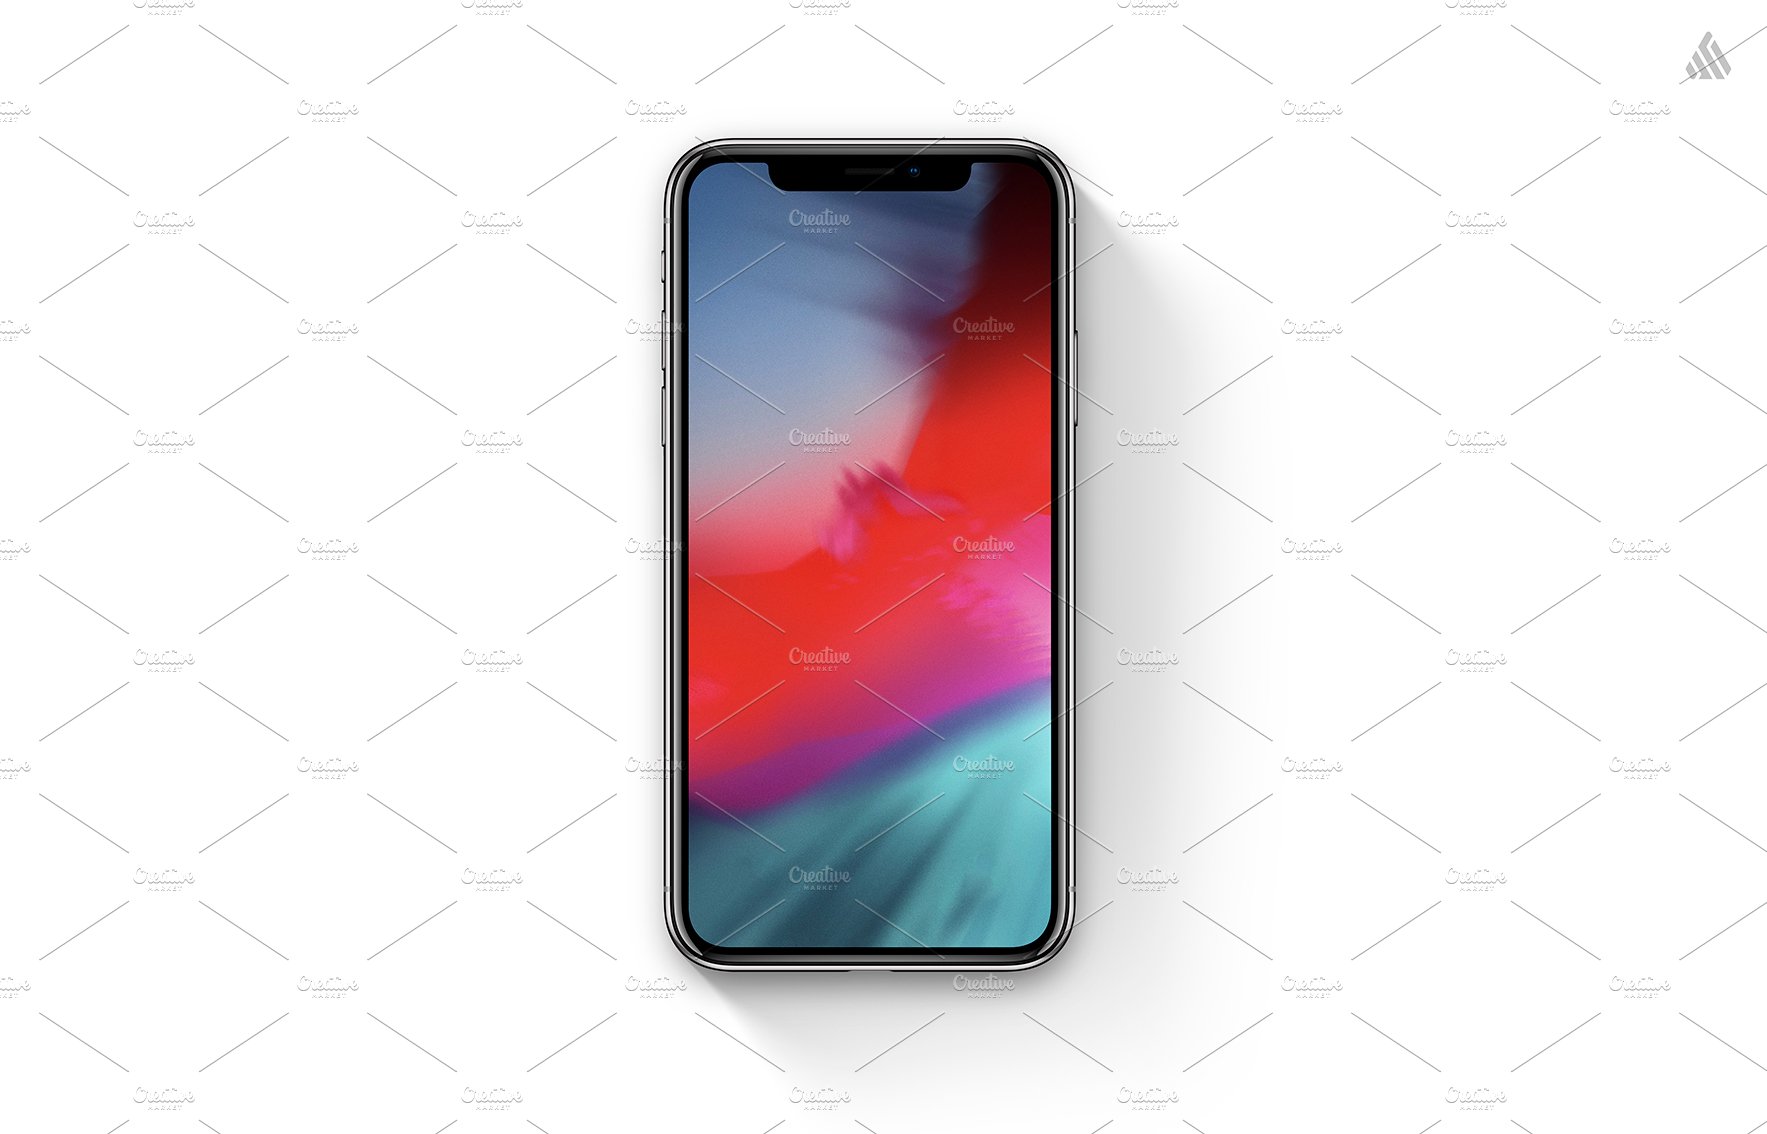 Phone X 2018 Mockup cover image.